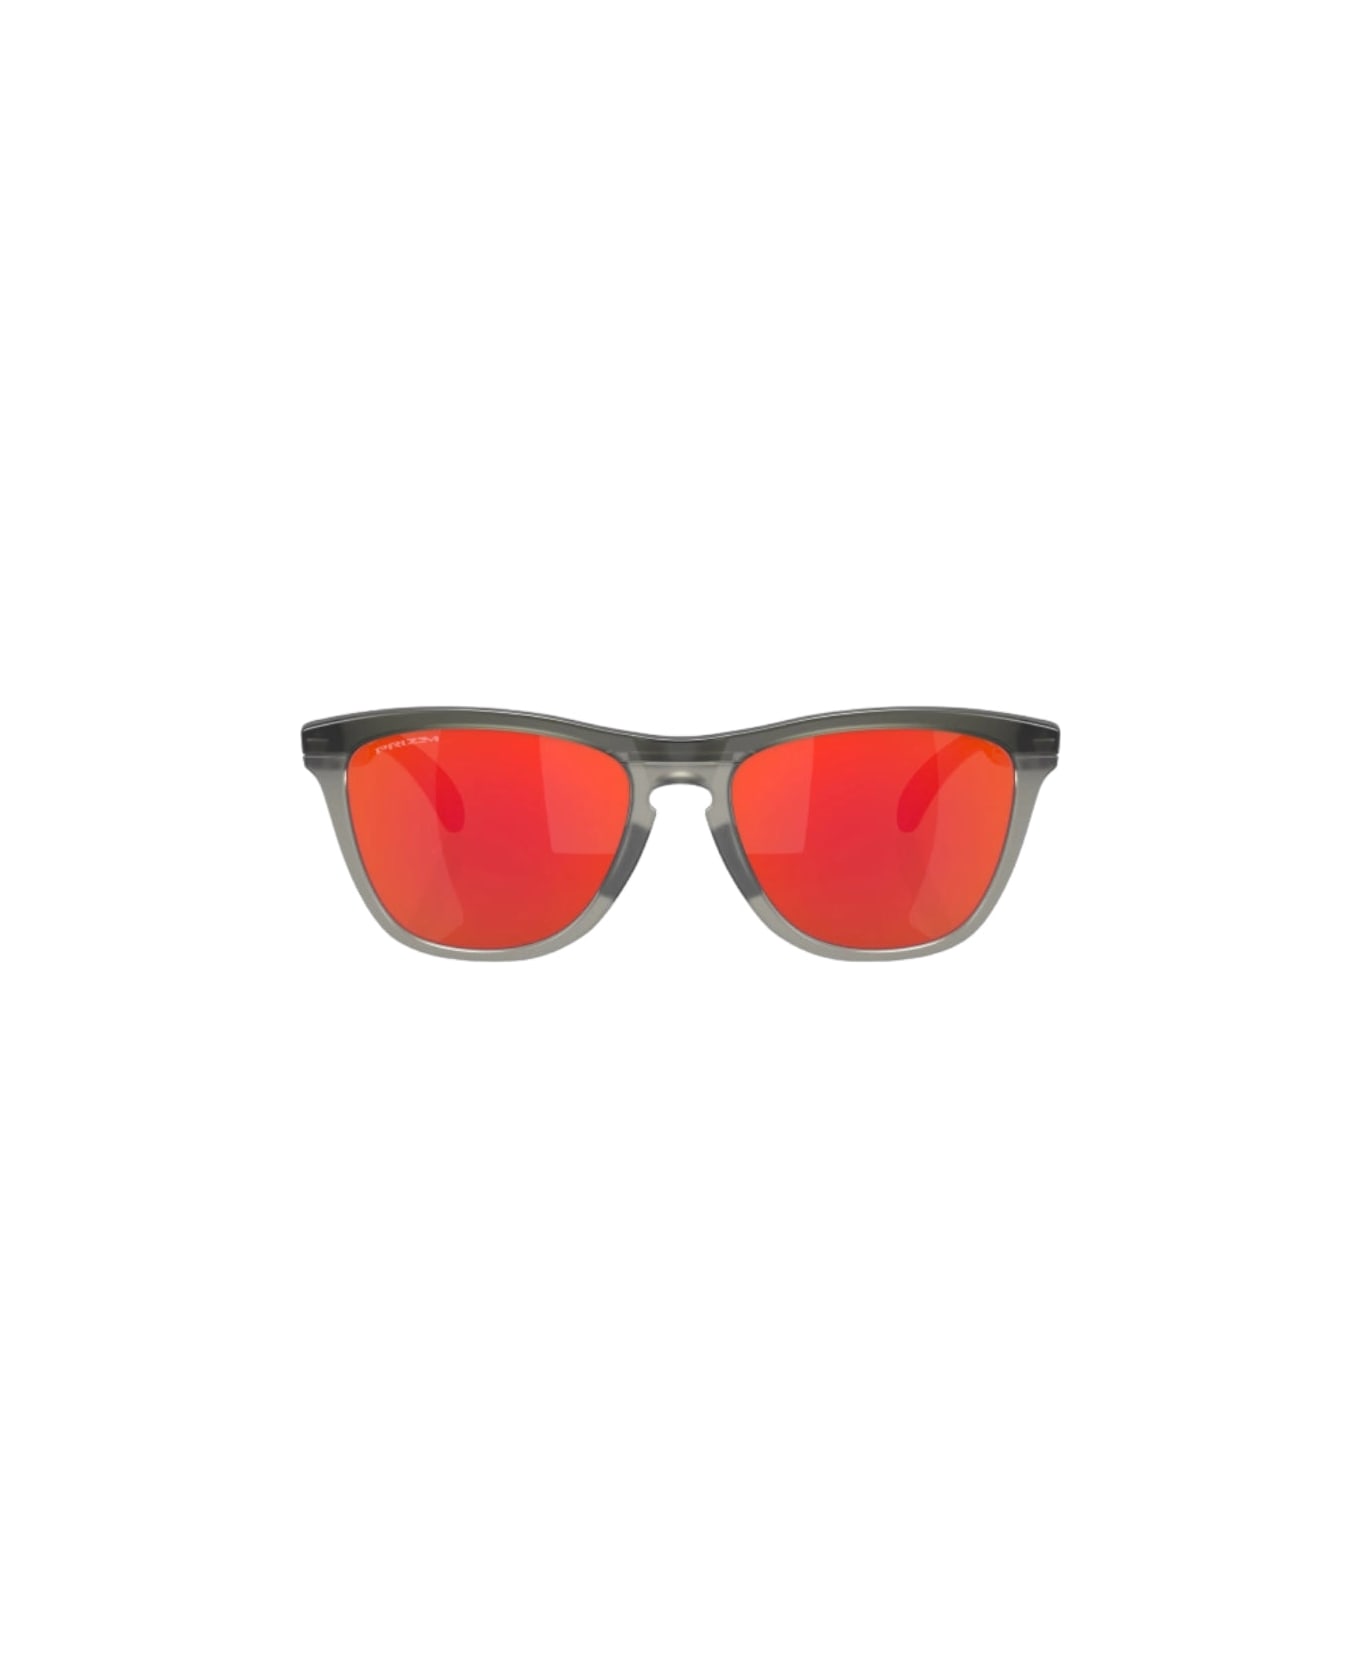 Oakley Frogskins Range - 9284 Sunglasses サングラス